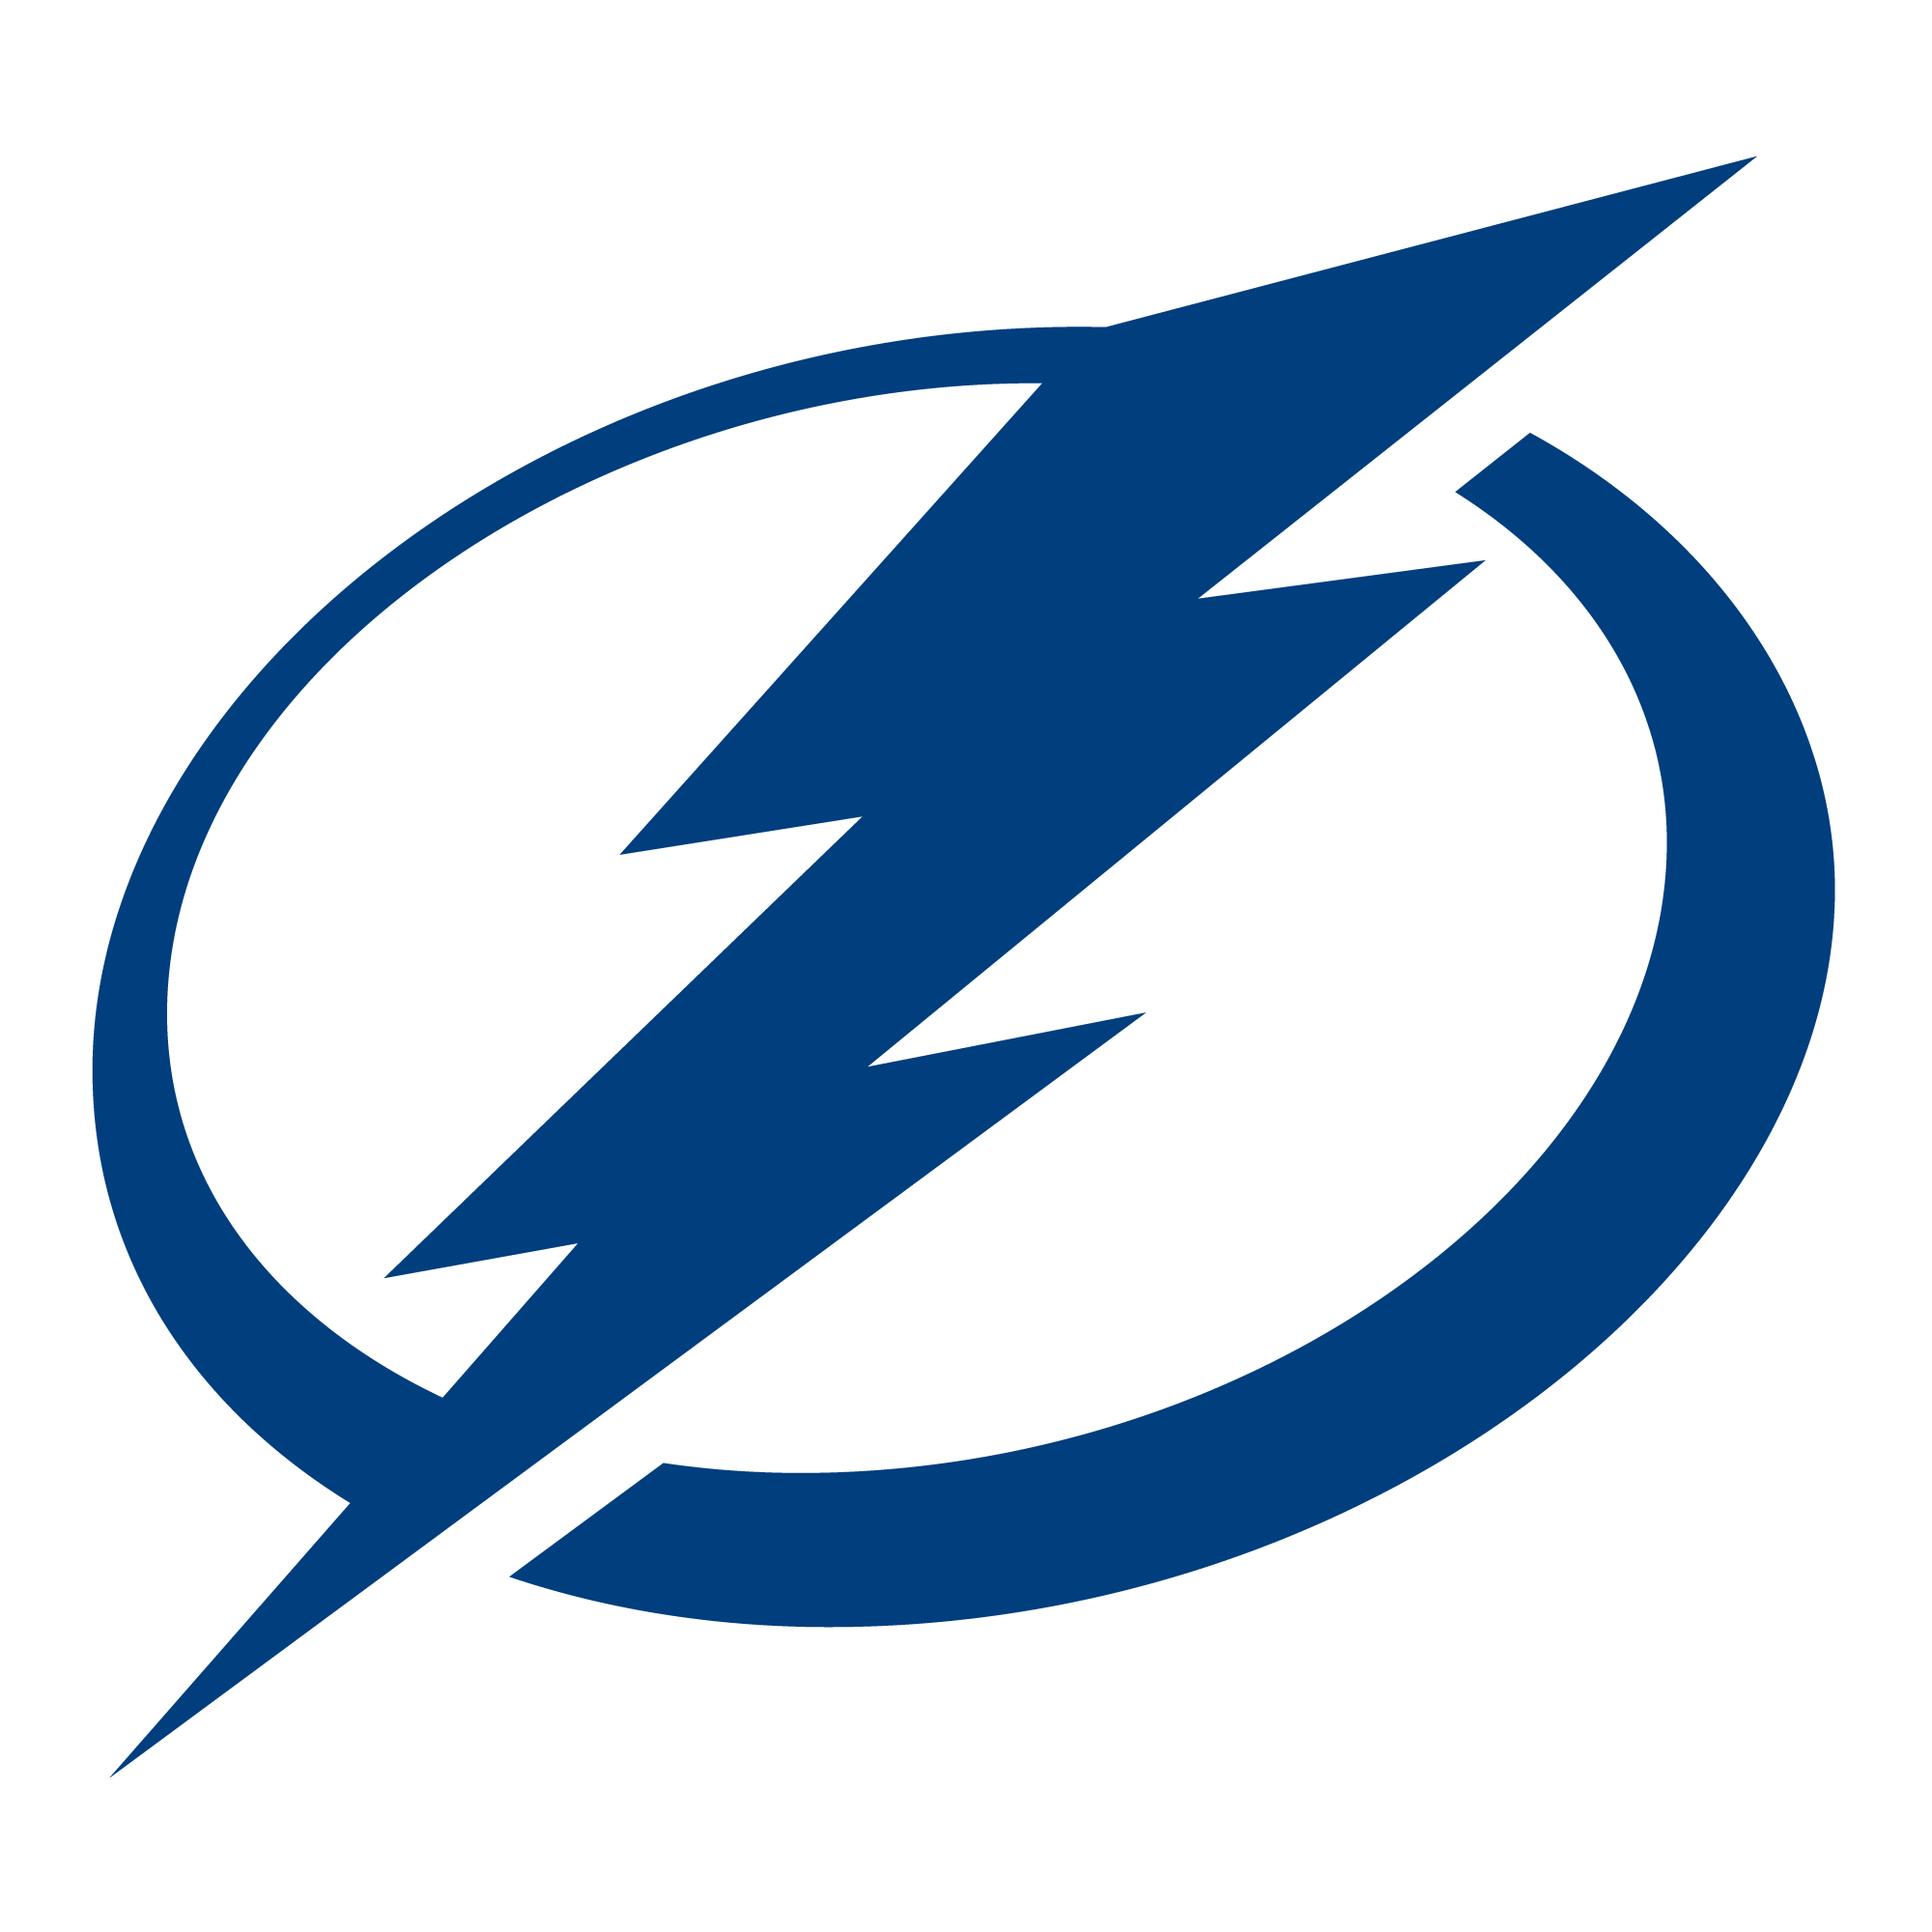 Tampa Bay Lightning Team Page